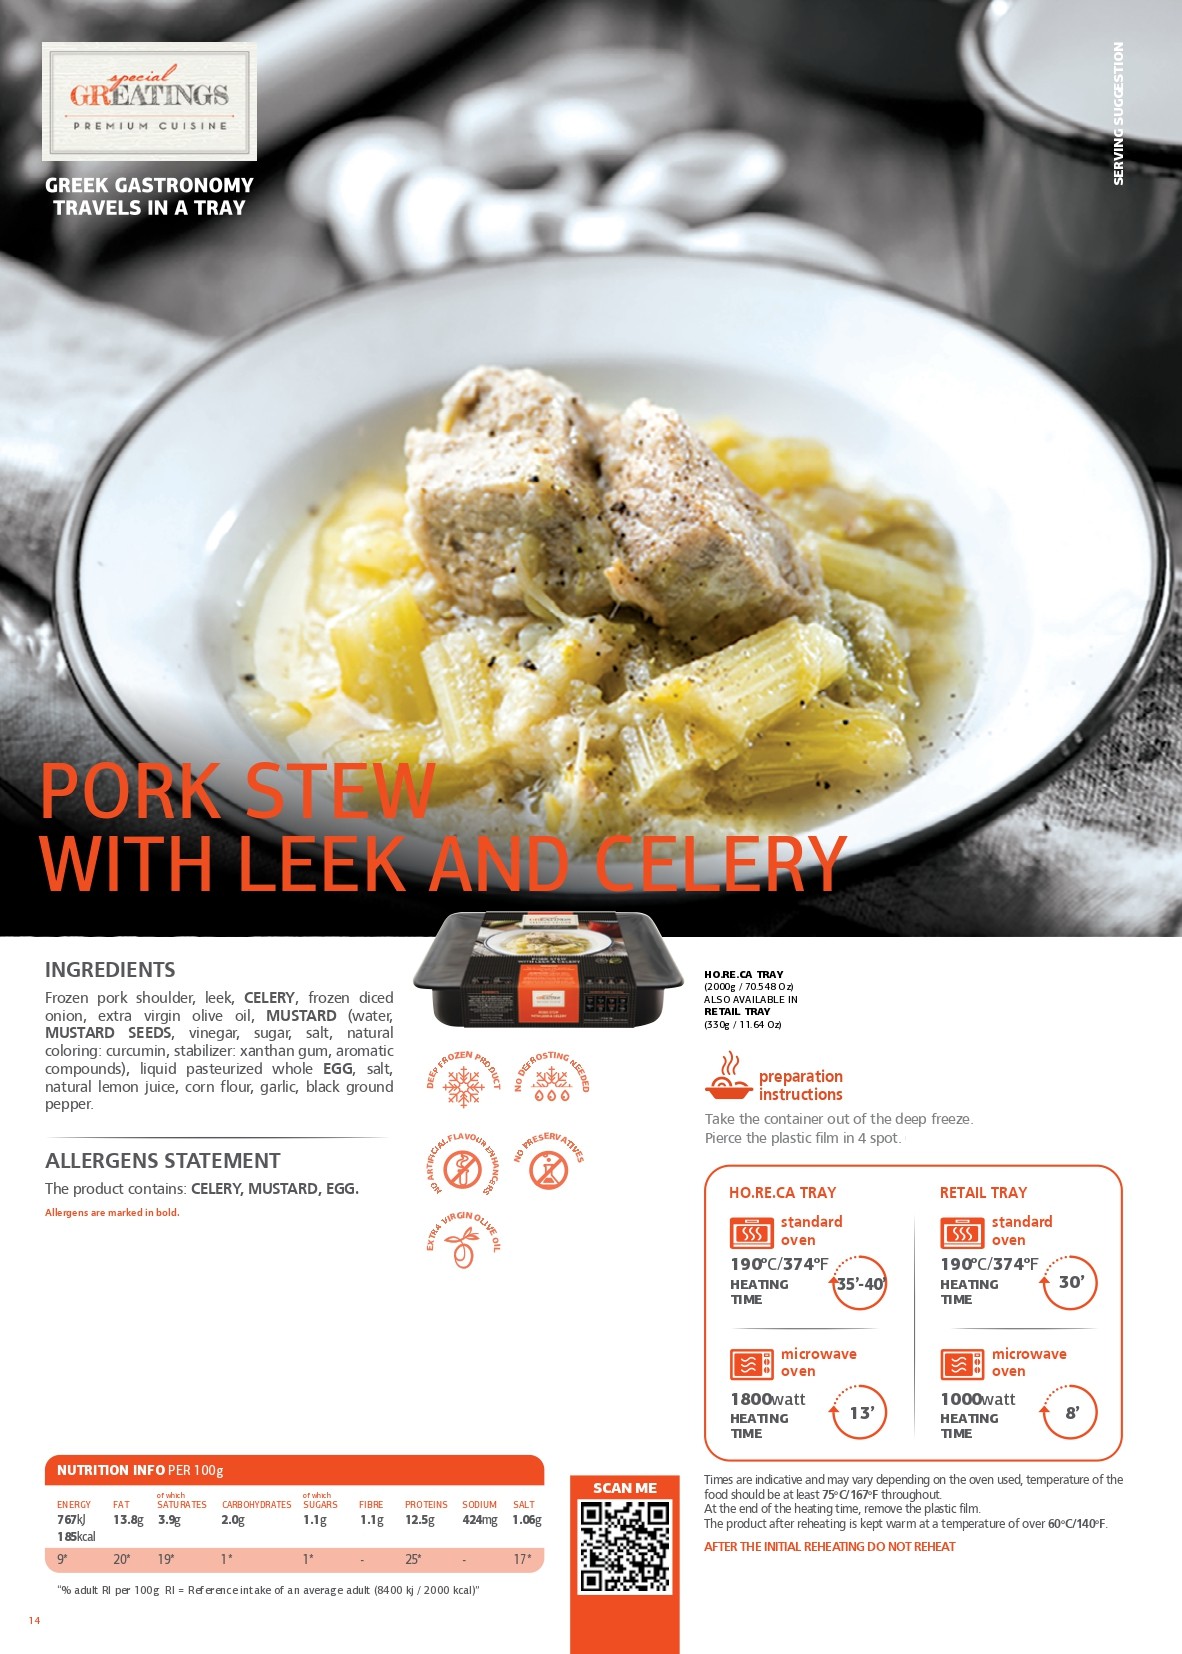 Pork stew with leek and celery pdf image